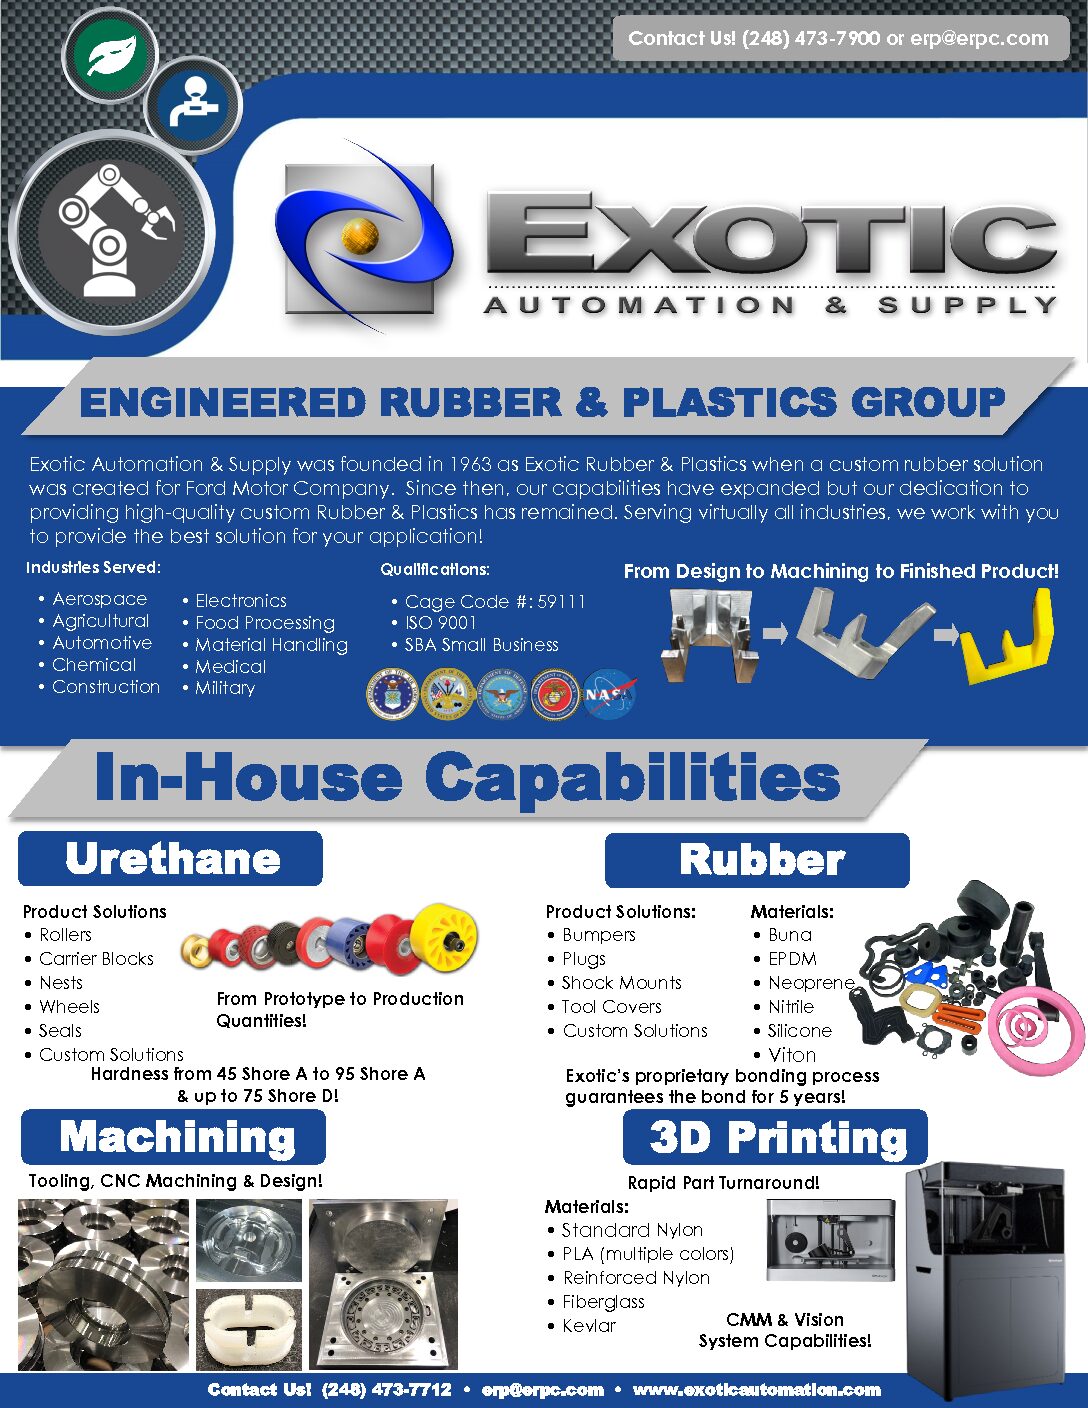 Exotic Engineered Rubber & Plastics